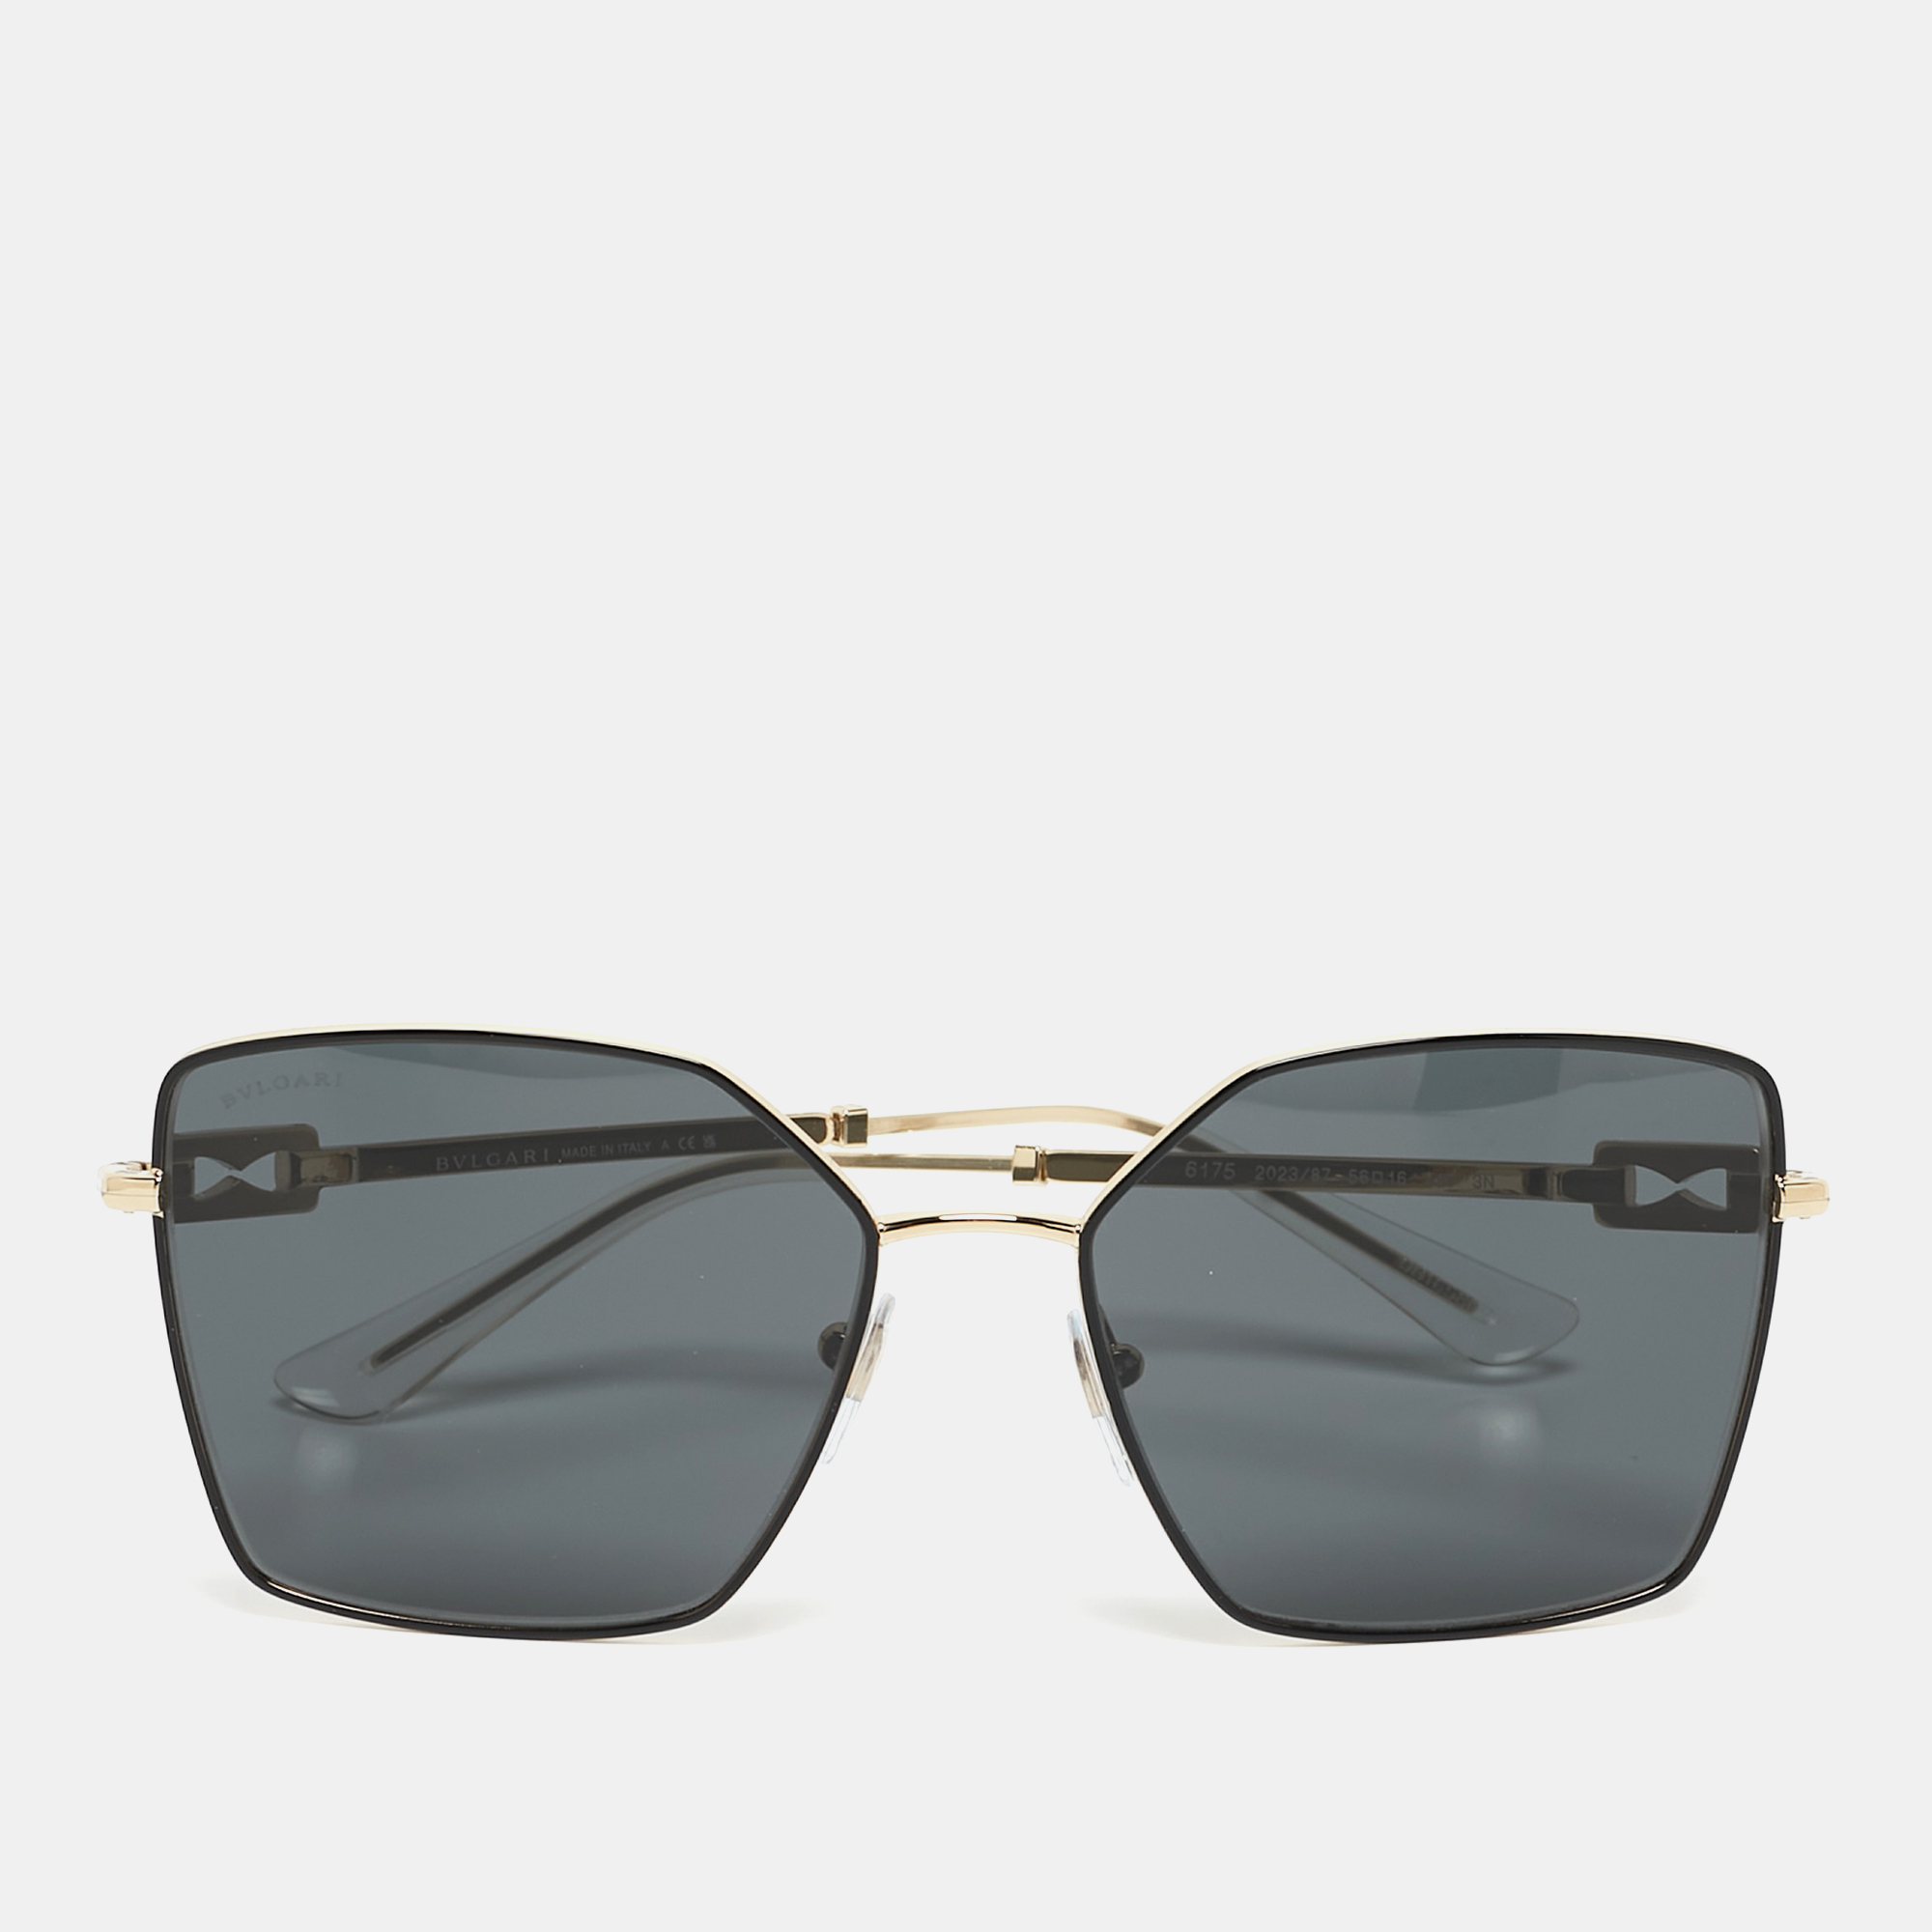 Bvlgari Black/Gold  67175 2023/87 Square Sunglasses